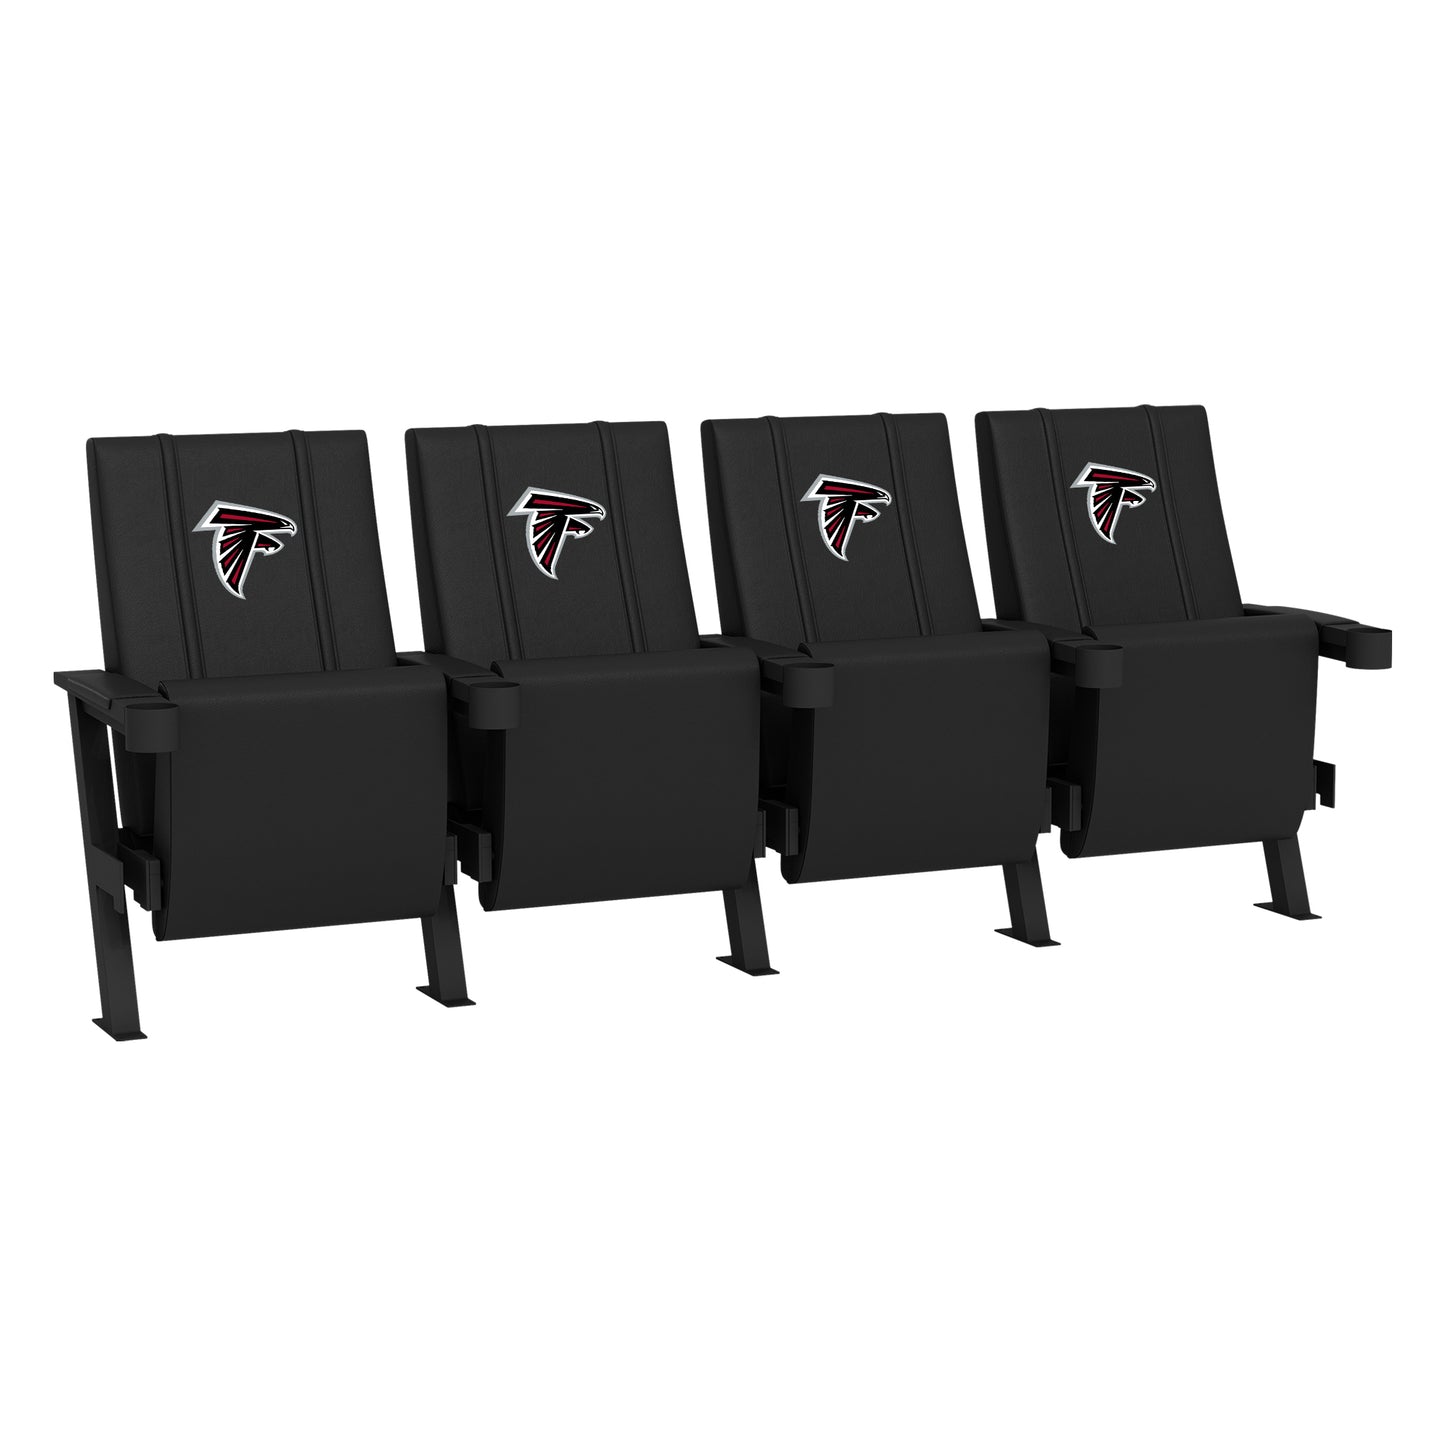 SuiteMax 3.5 VIP Seats with Atlanta Falcons Primary Logo